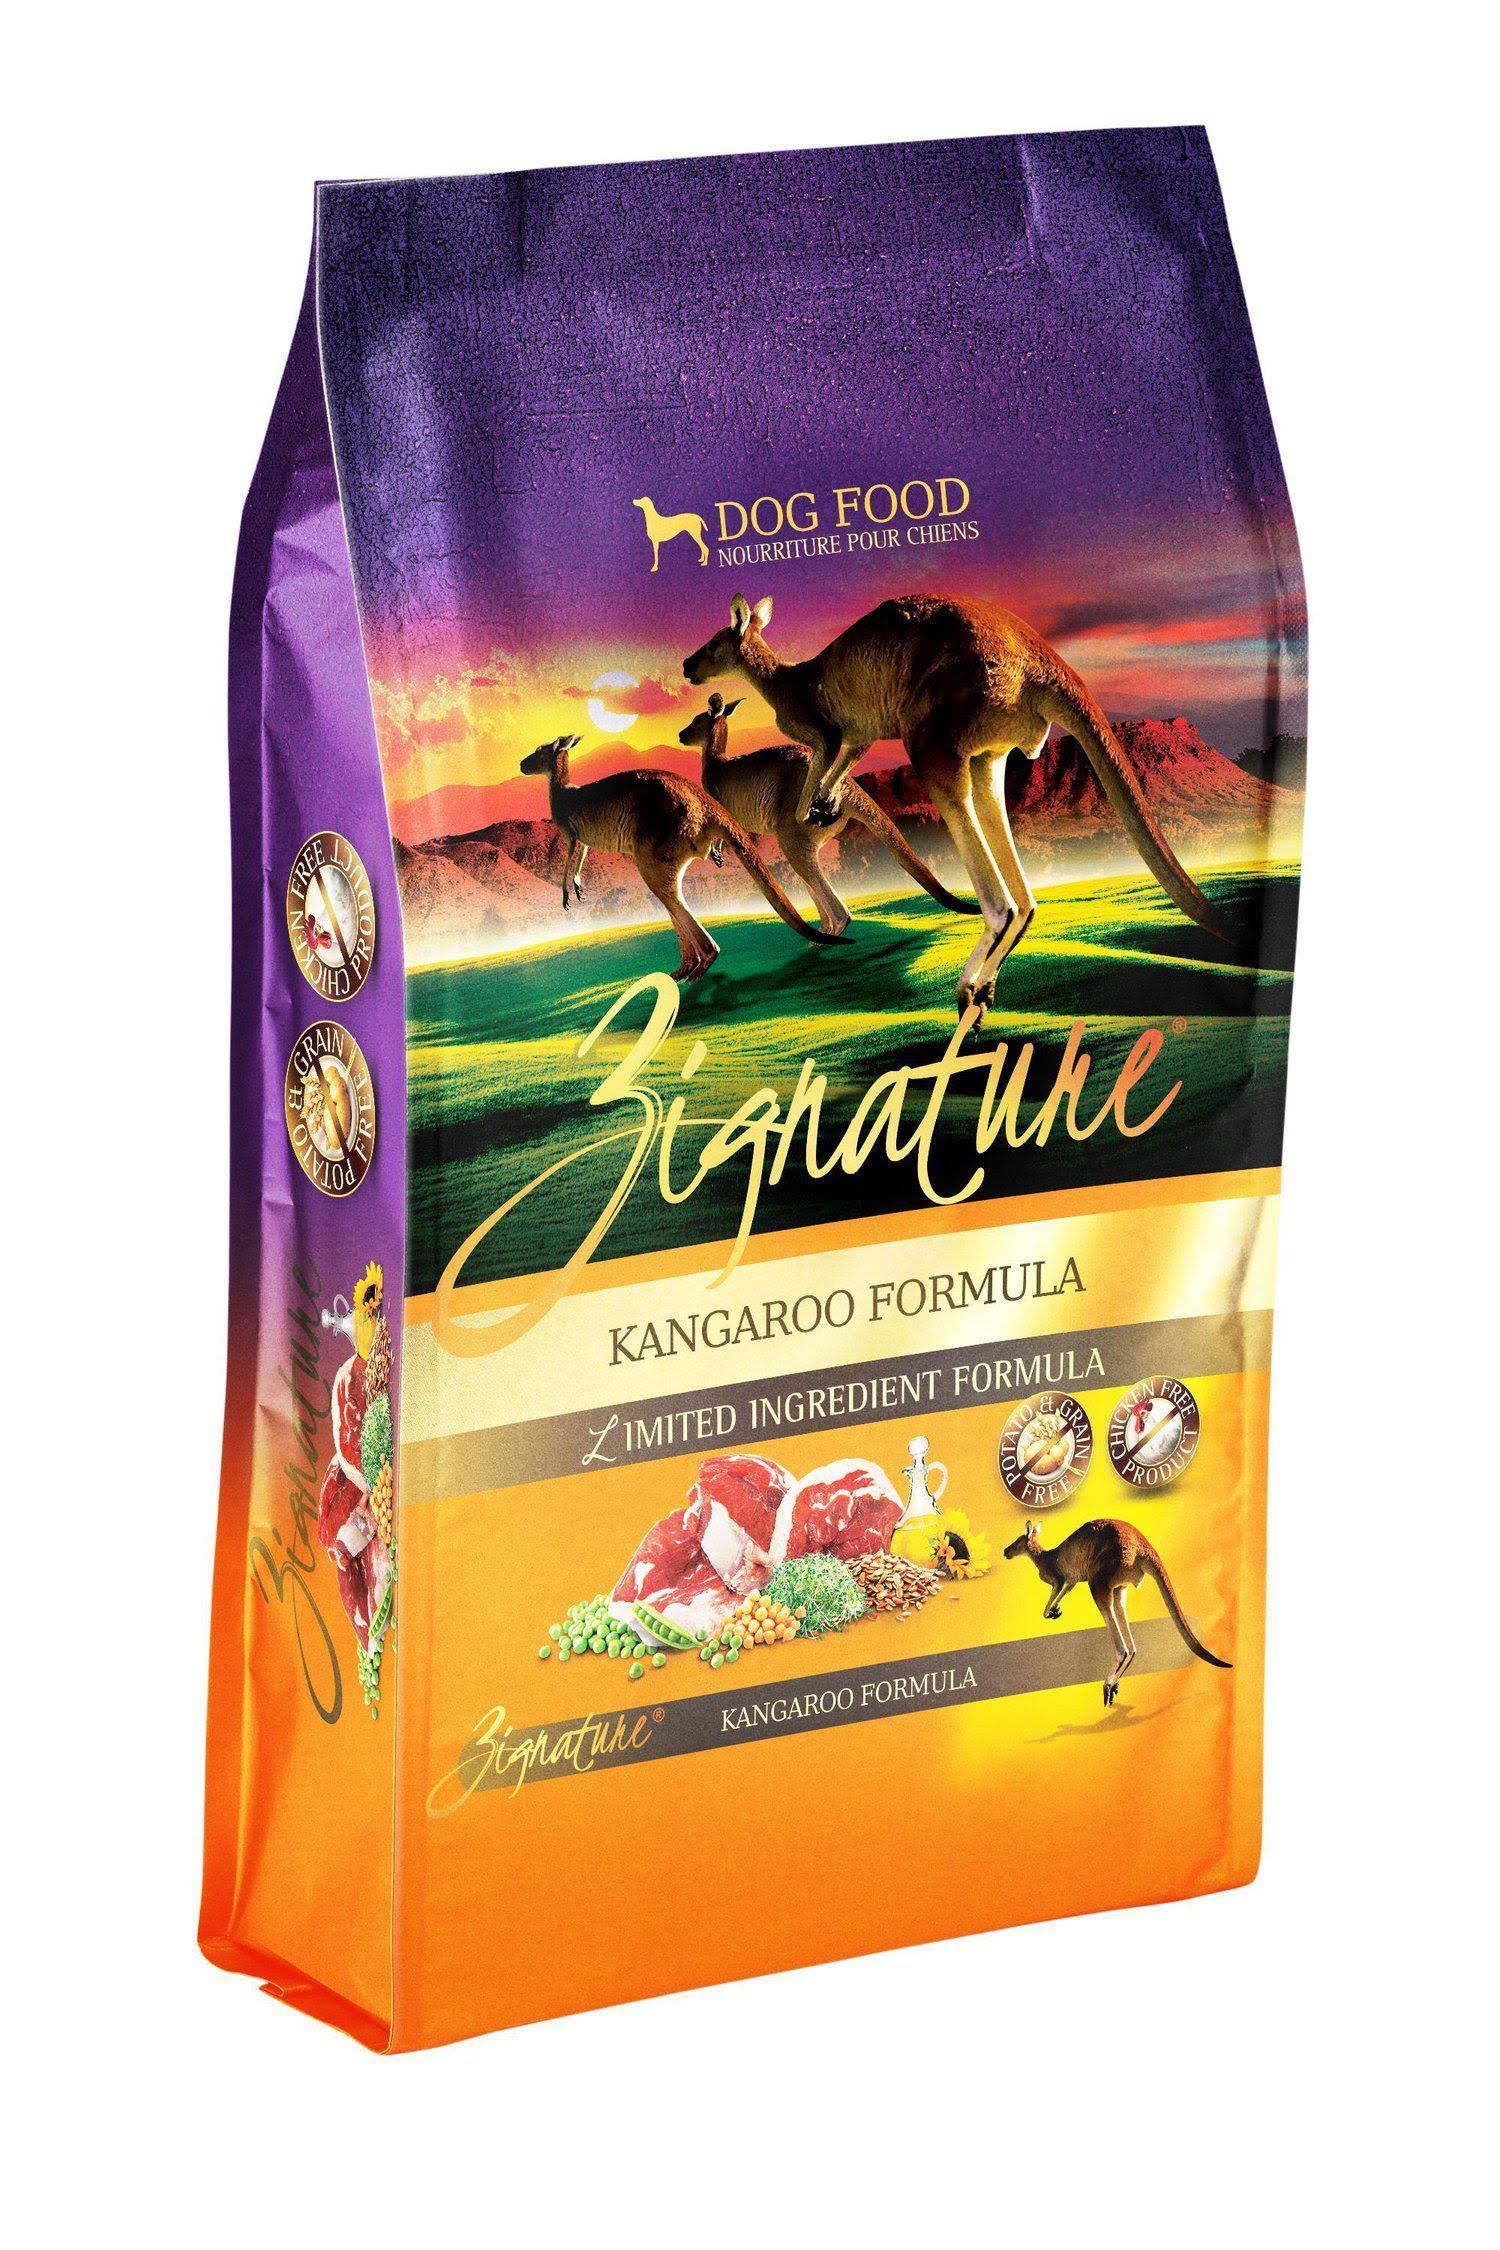 Zignature Kangaroo Formula Dog Food - 4lb